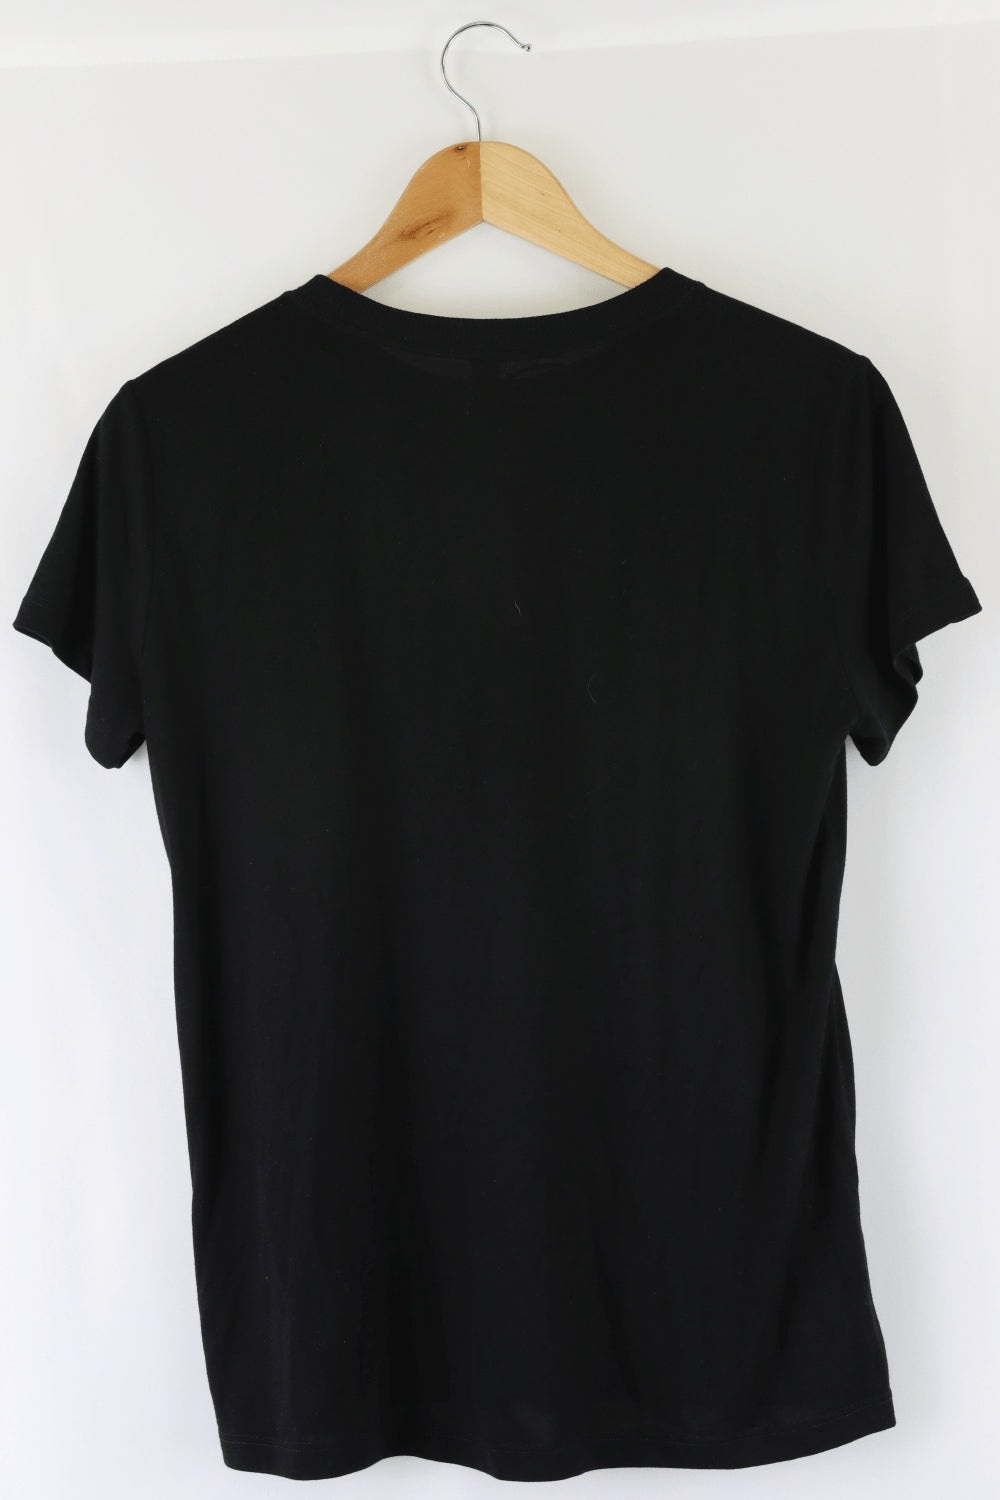 Lorna Jane Black T-Shirt Top S